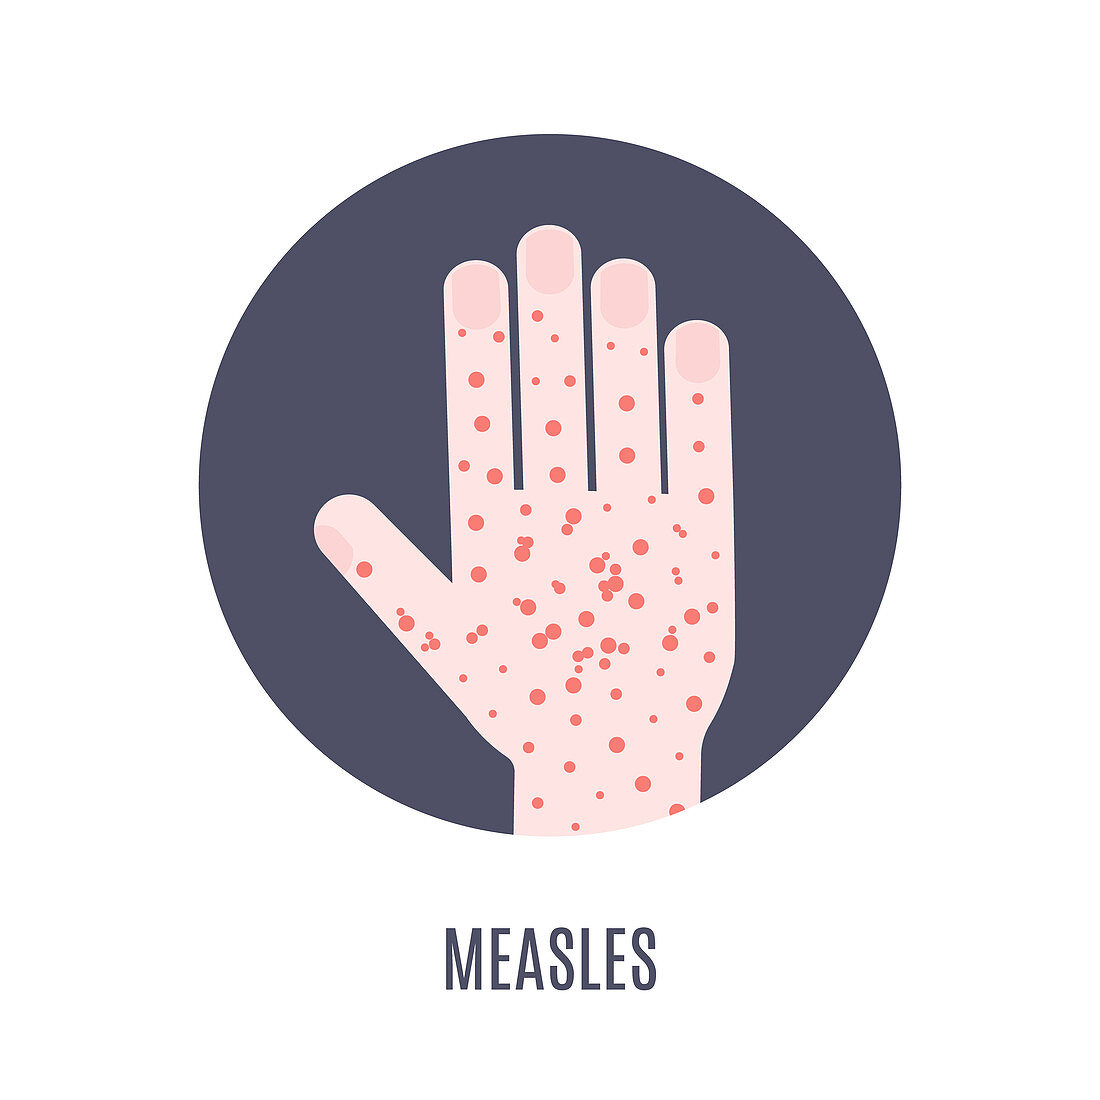 Measles awareness, illustration